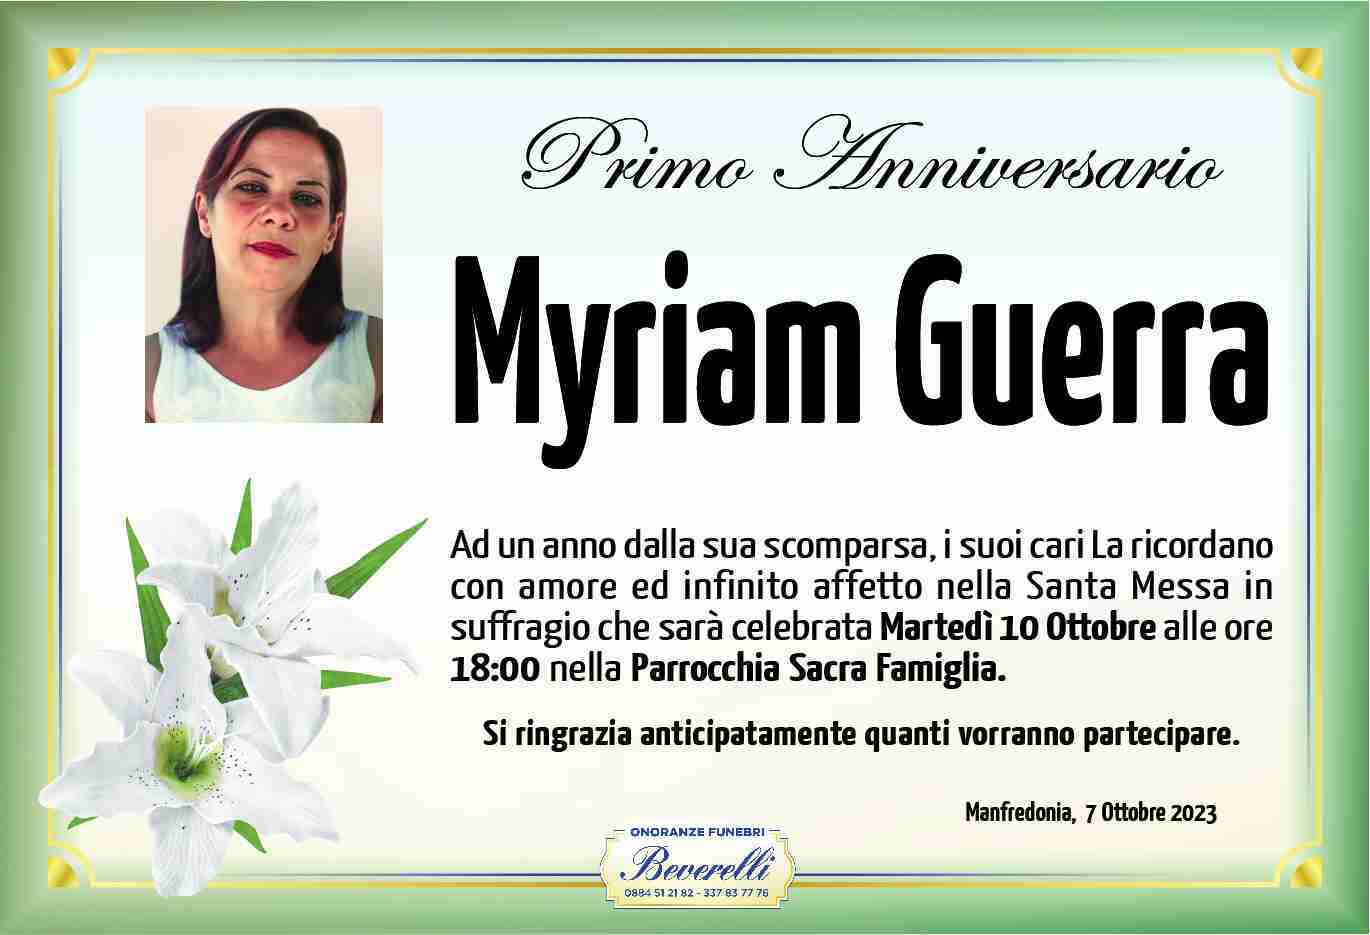 Myriam Guerra